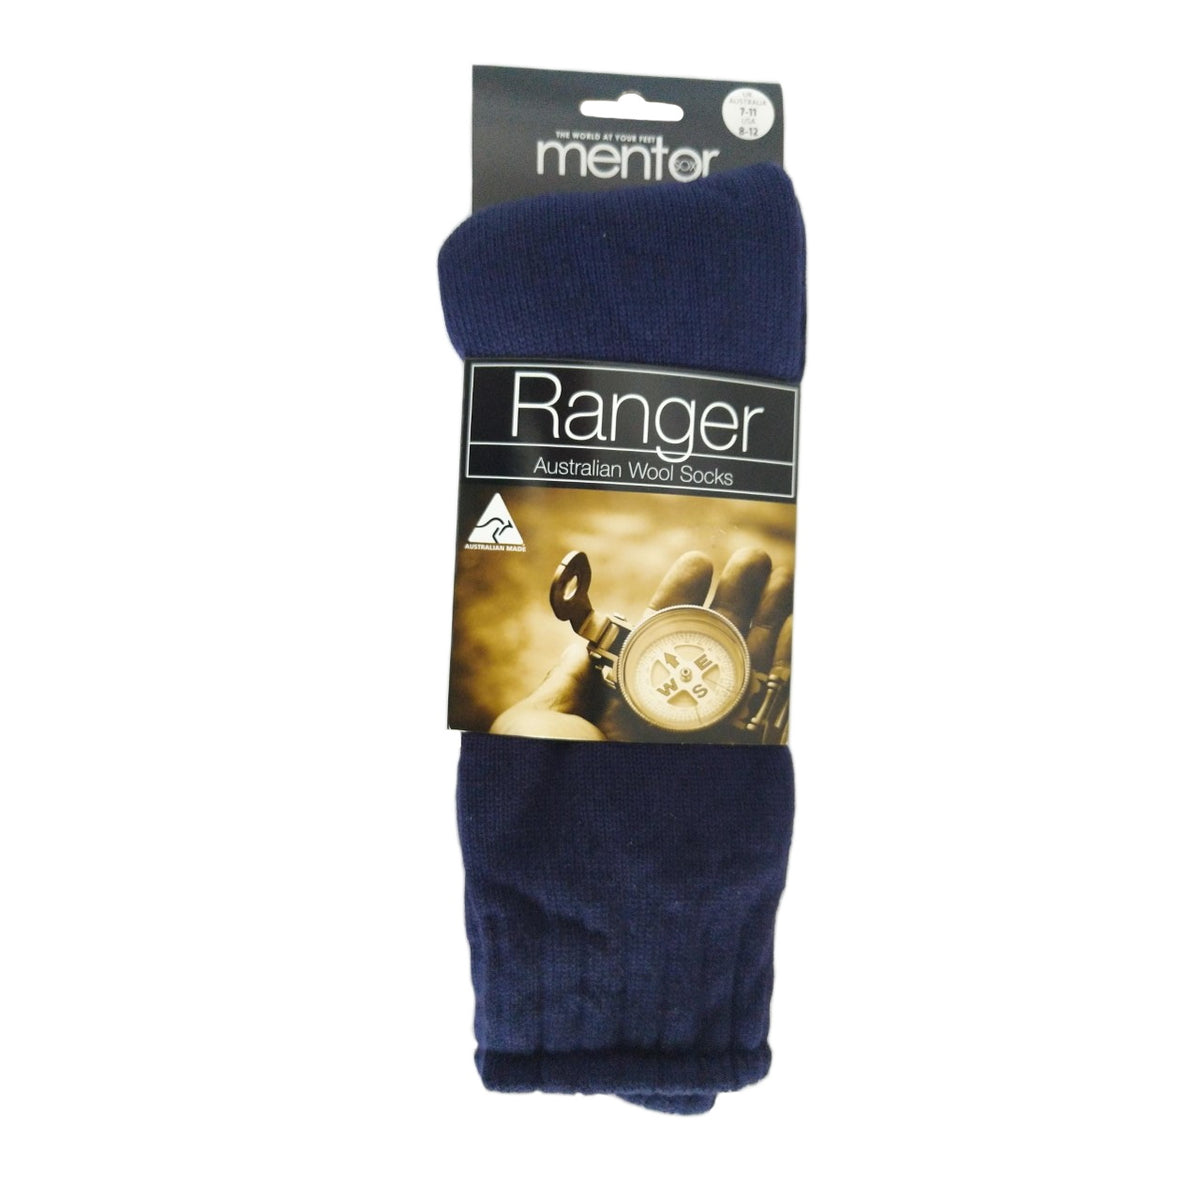 Mentor Ranger Wool Socks in Navy with packing.